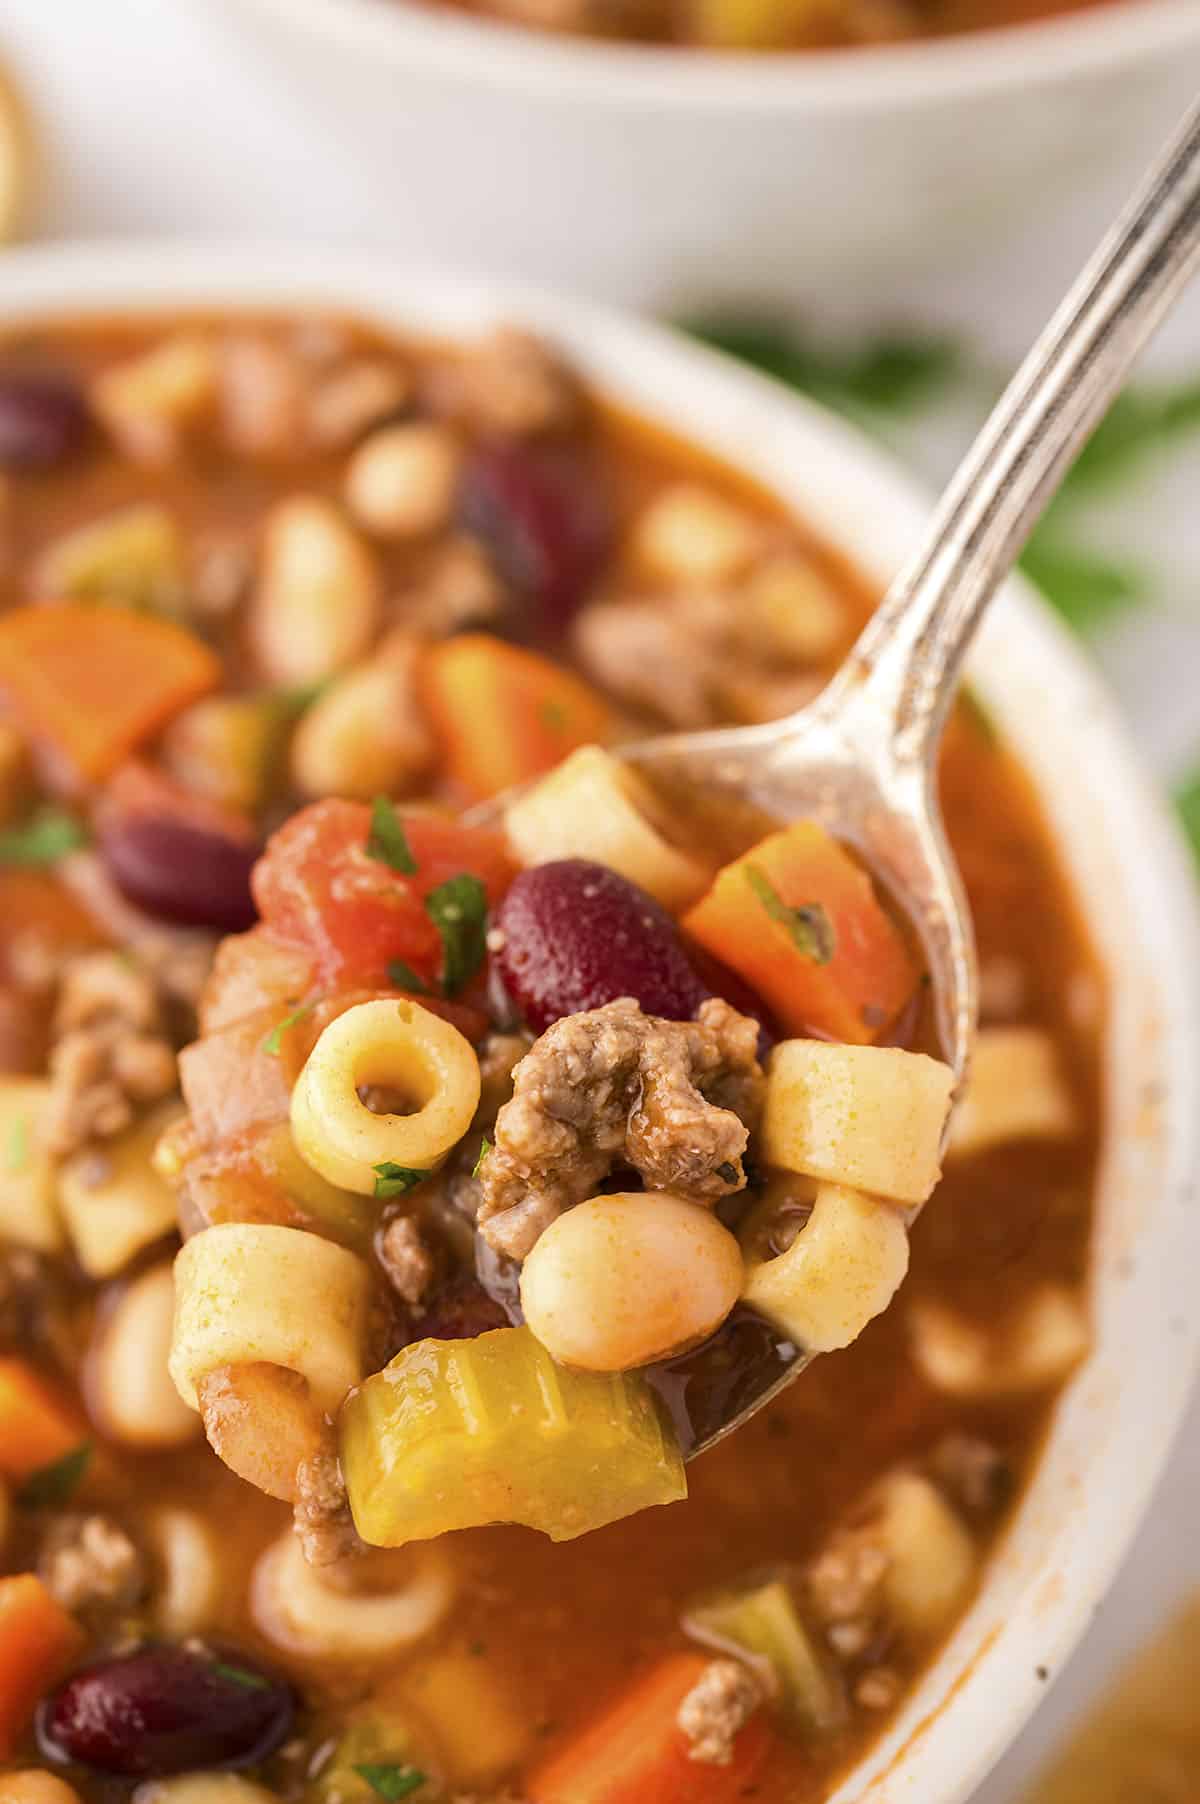 Olive Garden pasta fagioli soup recipe on spoon over bowl.